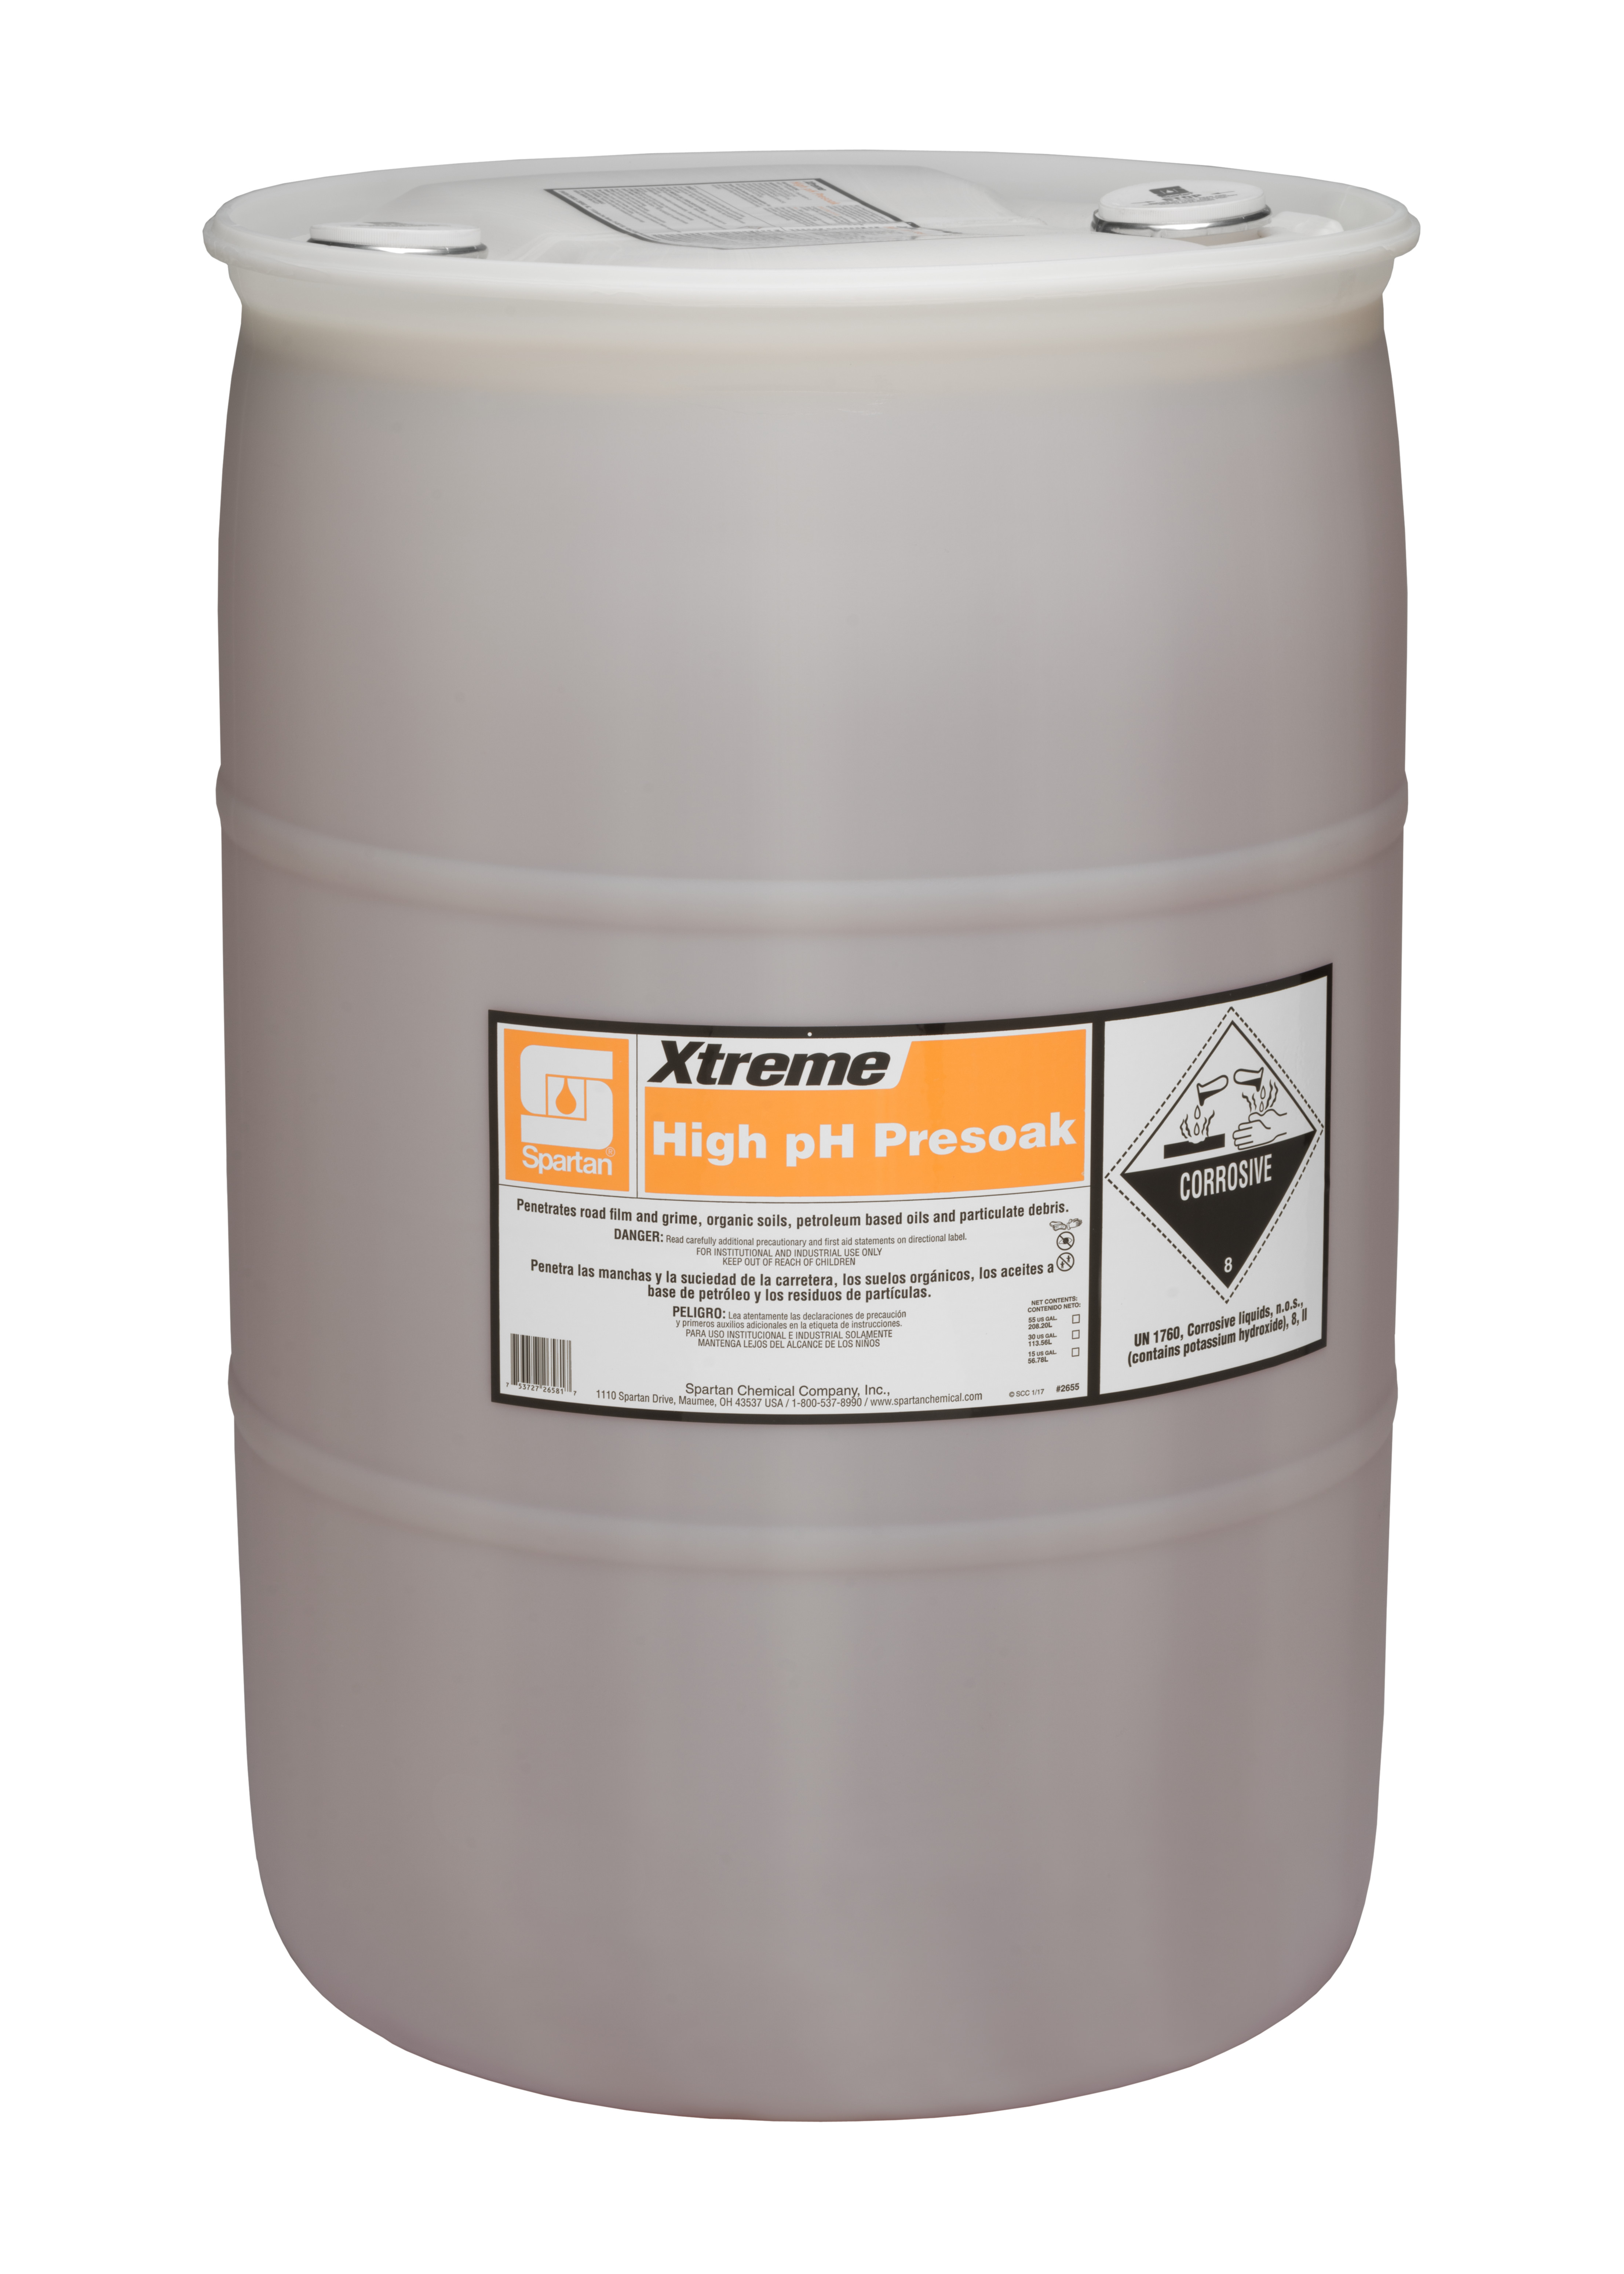 Spartan Chemical Company Xtreme High pH Presoak, 55 GAL DRUM